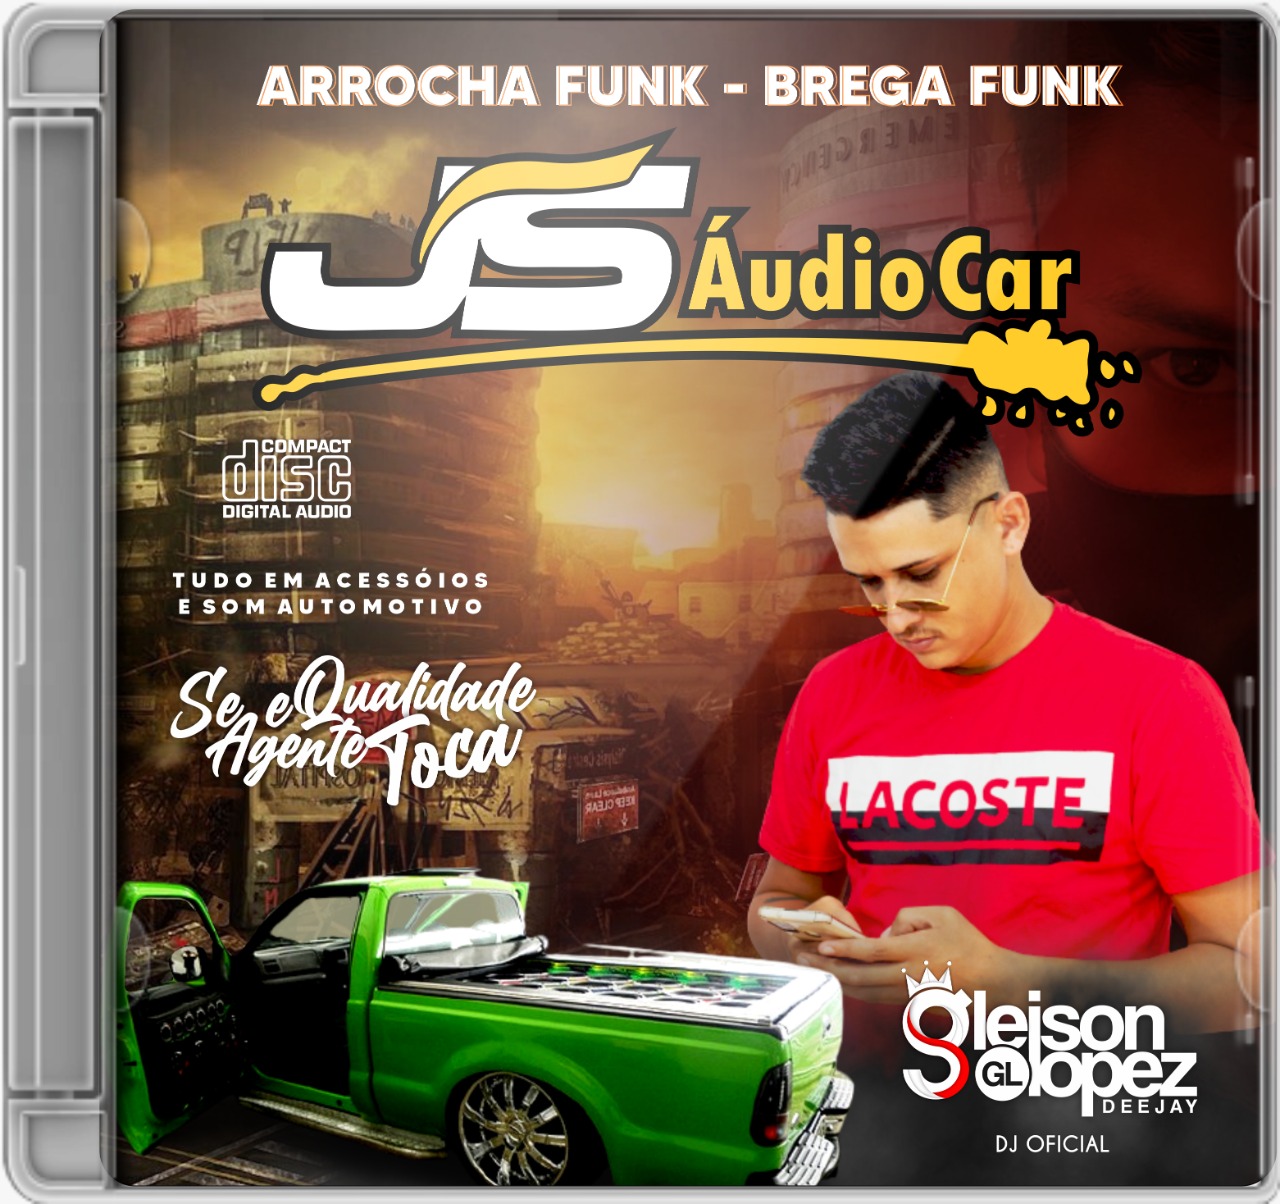 CD JS AUDIO CAR - PROMO - ABRIL - 2K21 - Gleison Lopez DJ